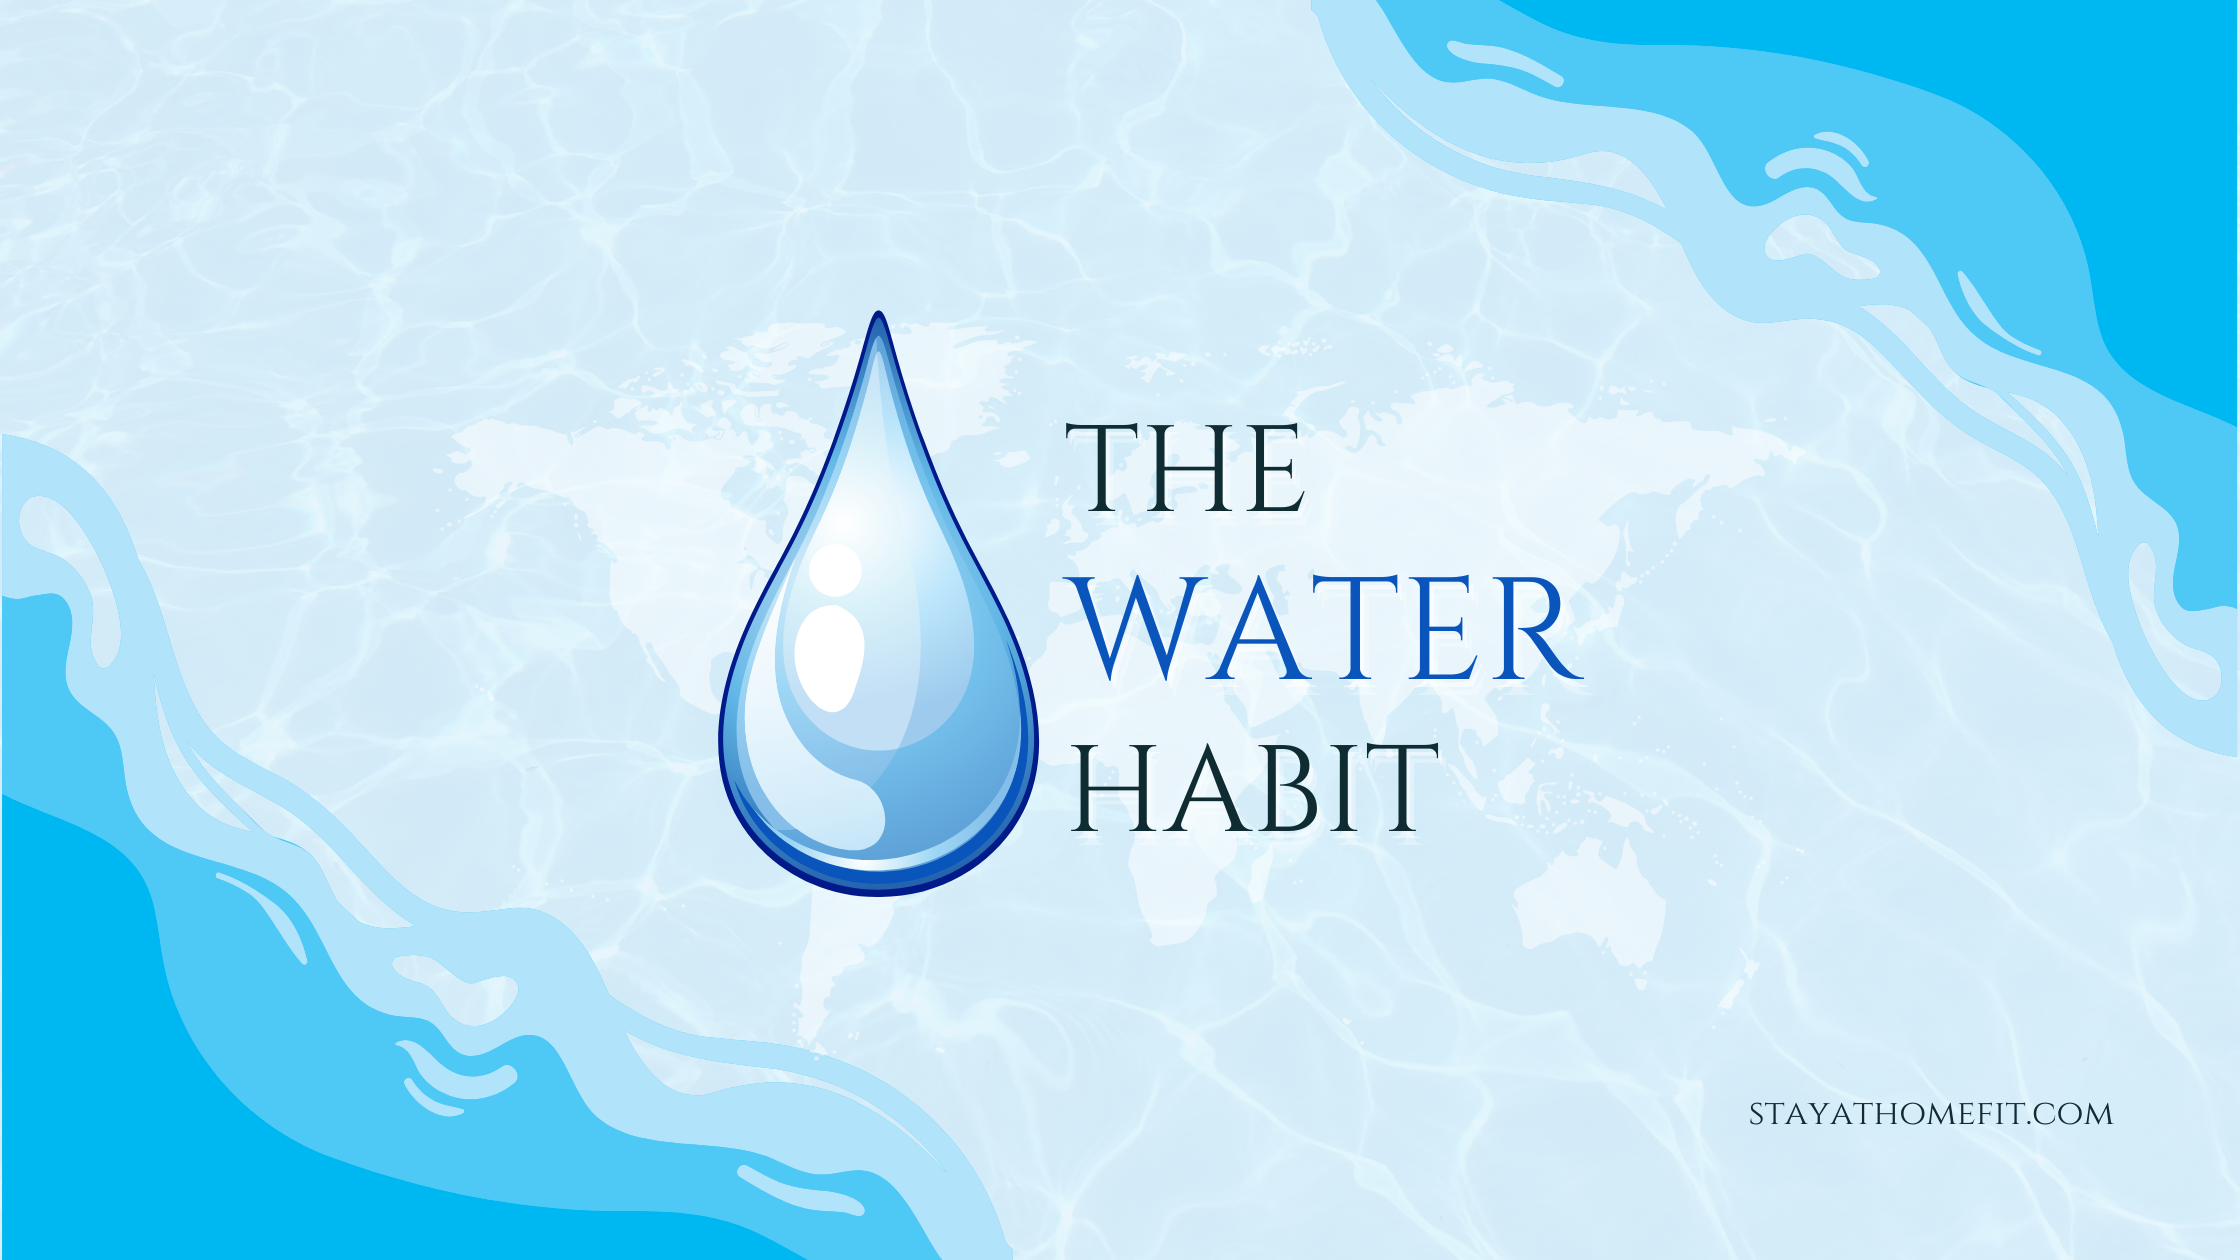 Blog Title: The Water Habit